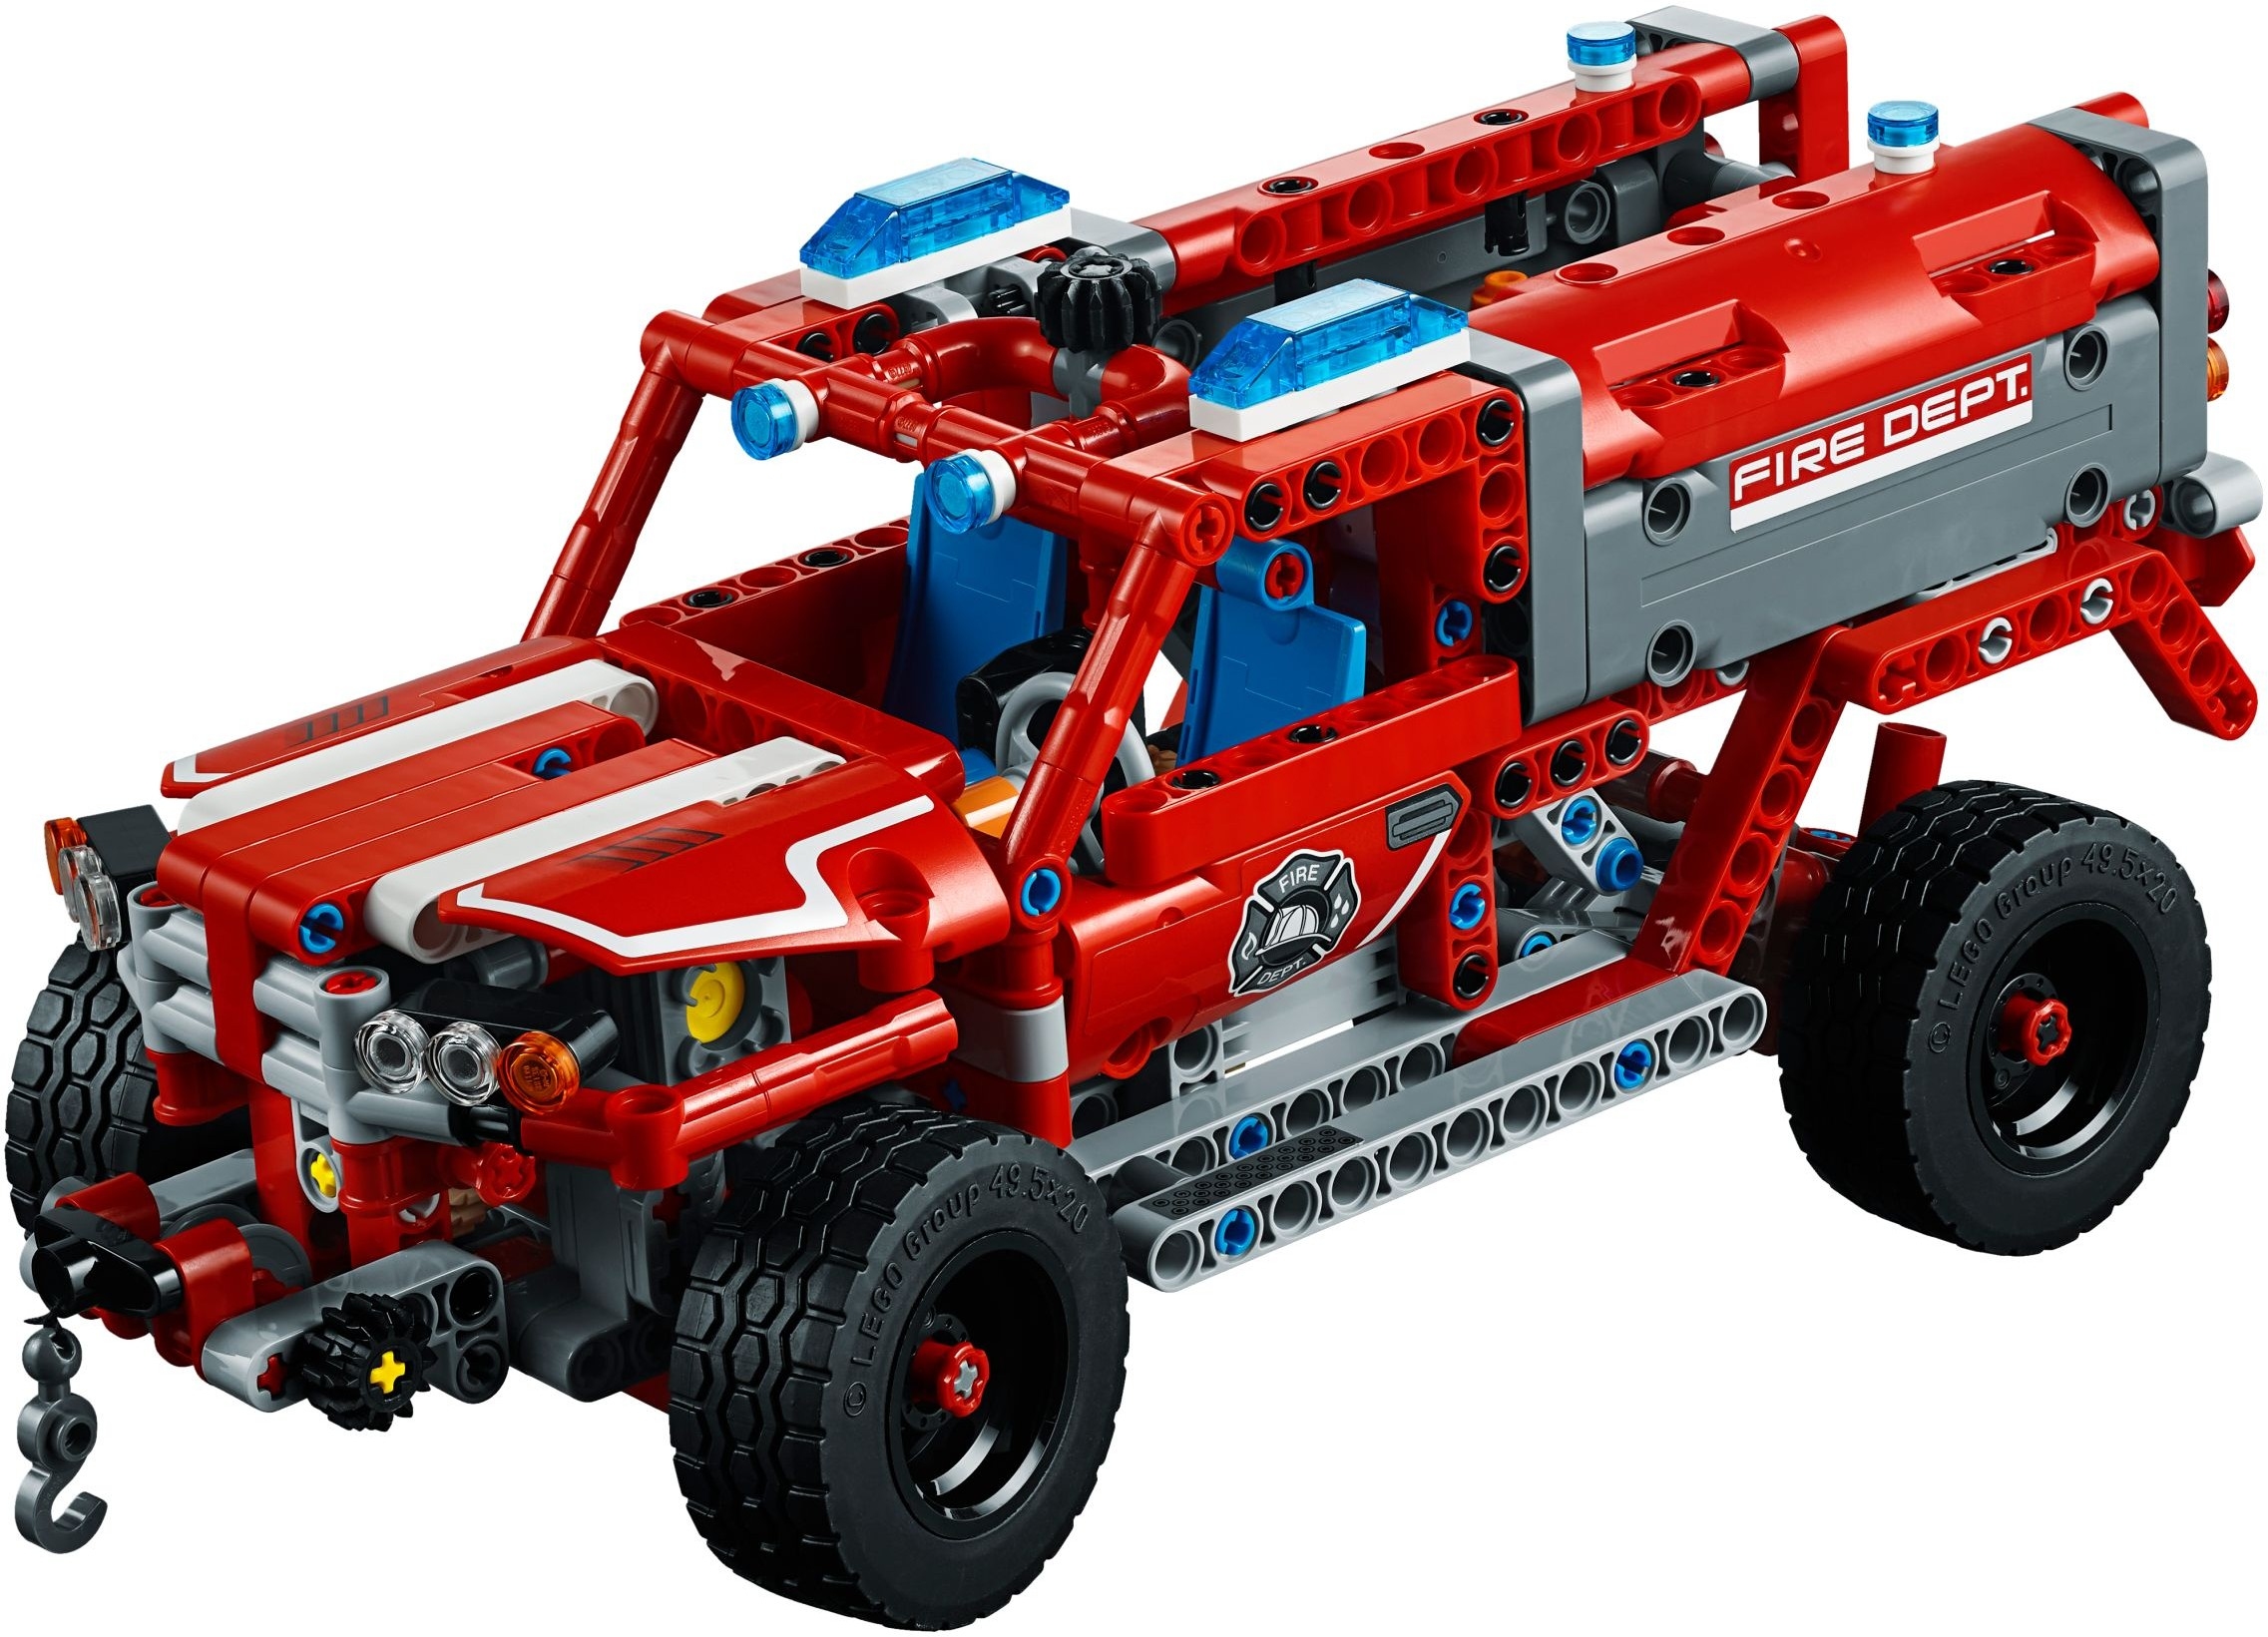 LEGO Technic 42073